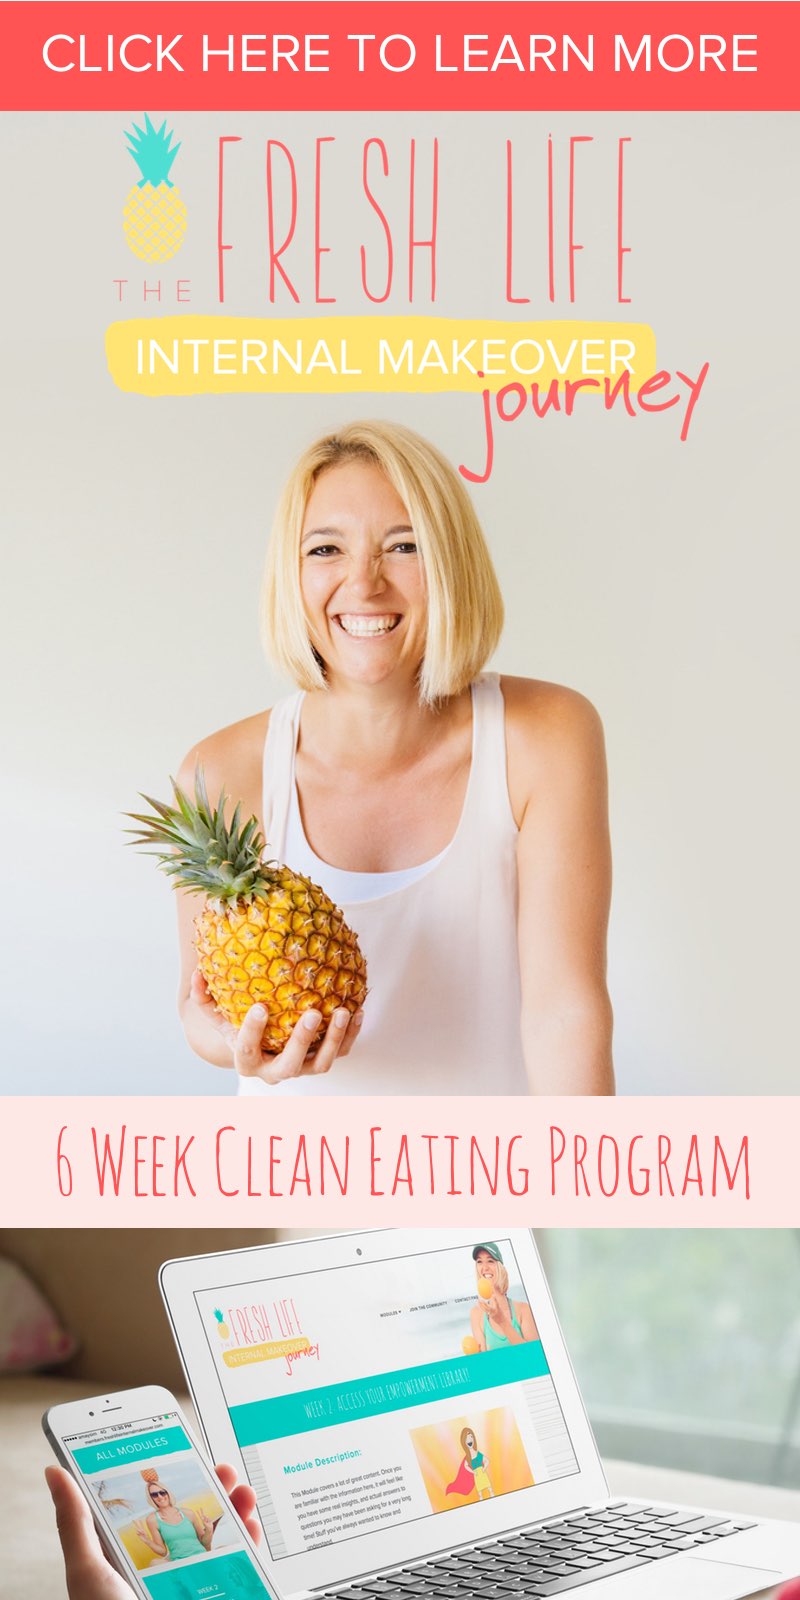 join-clean-eating-program-flimj-live-now-sm